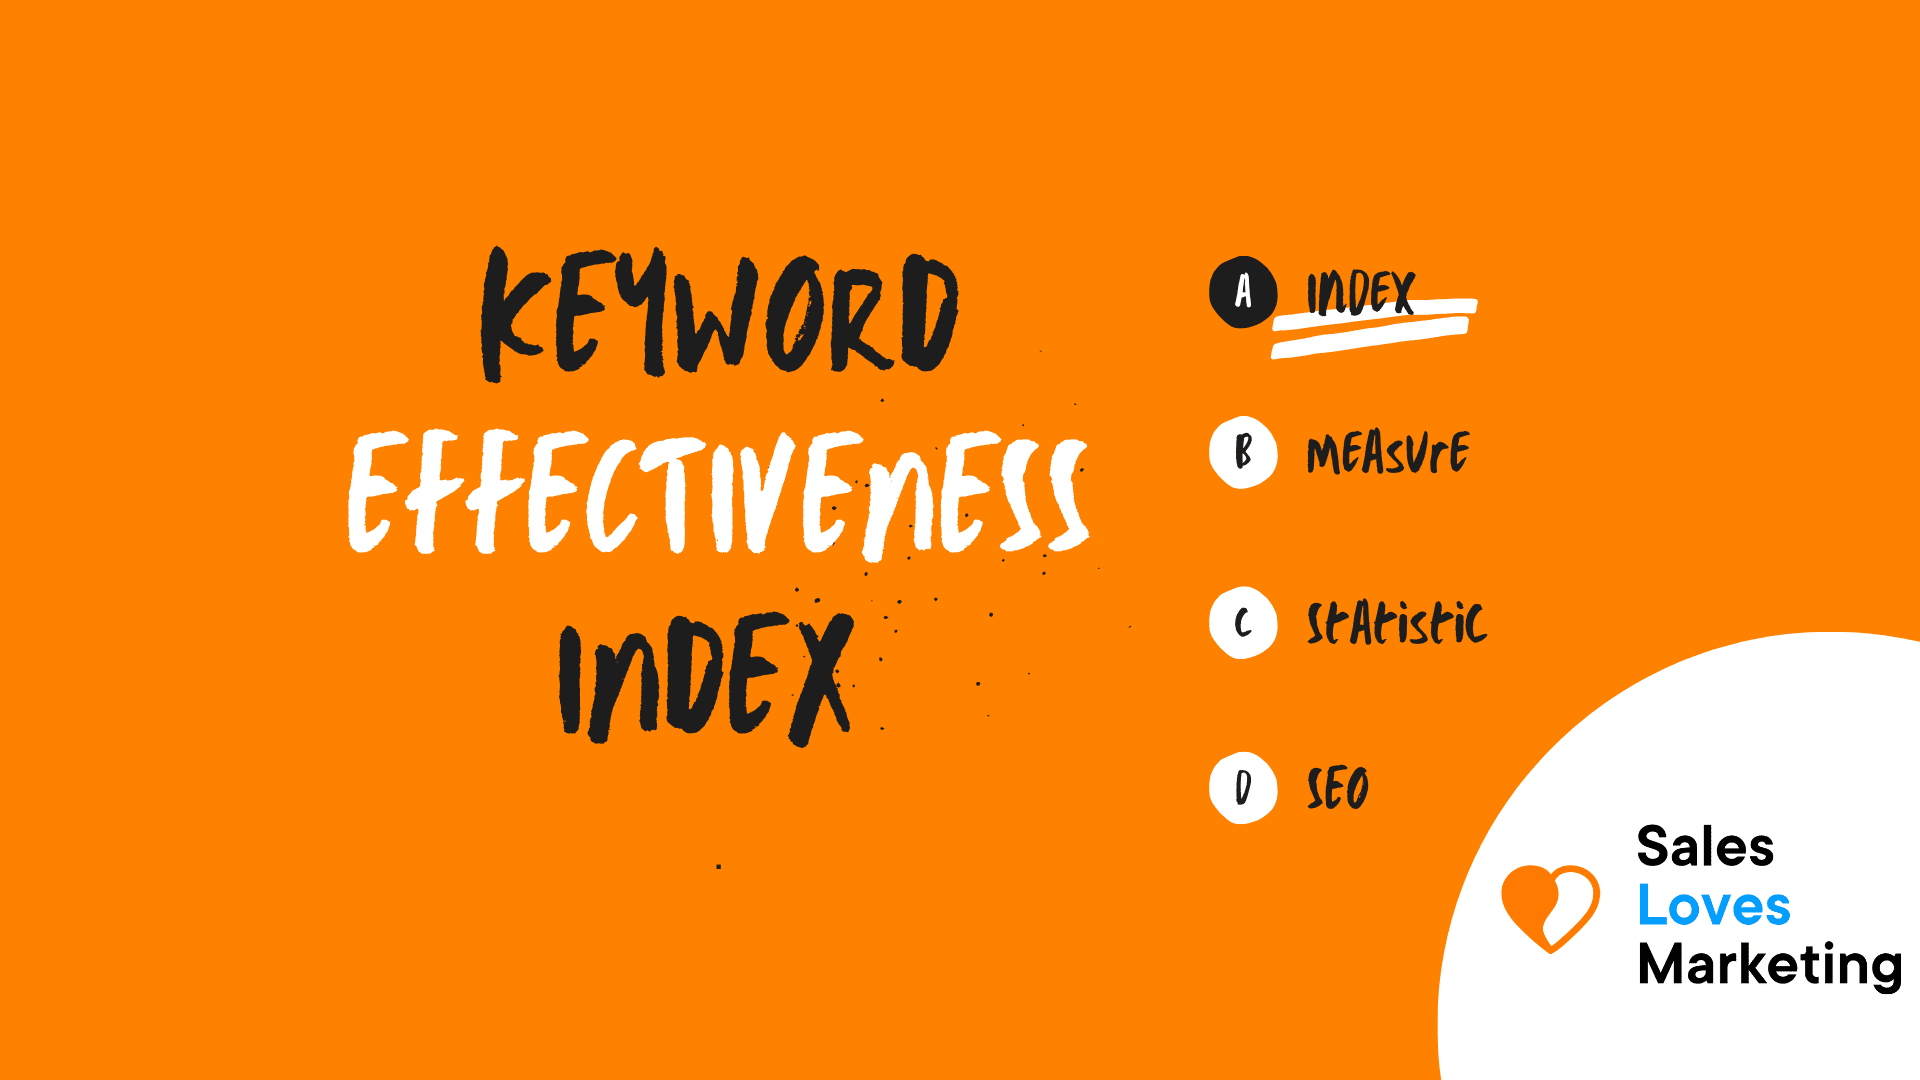 Keyword Effectiveness Index (KEI)